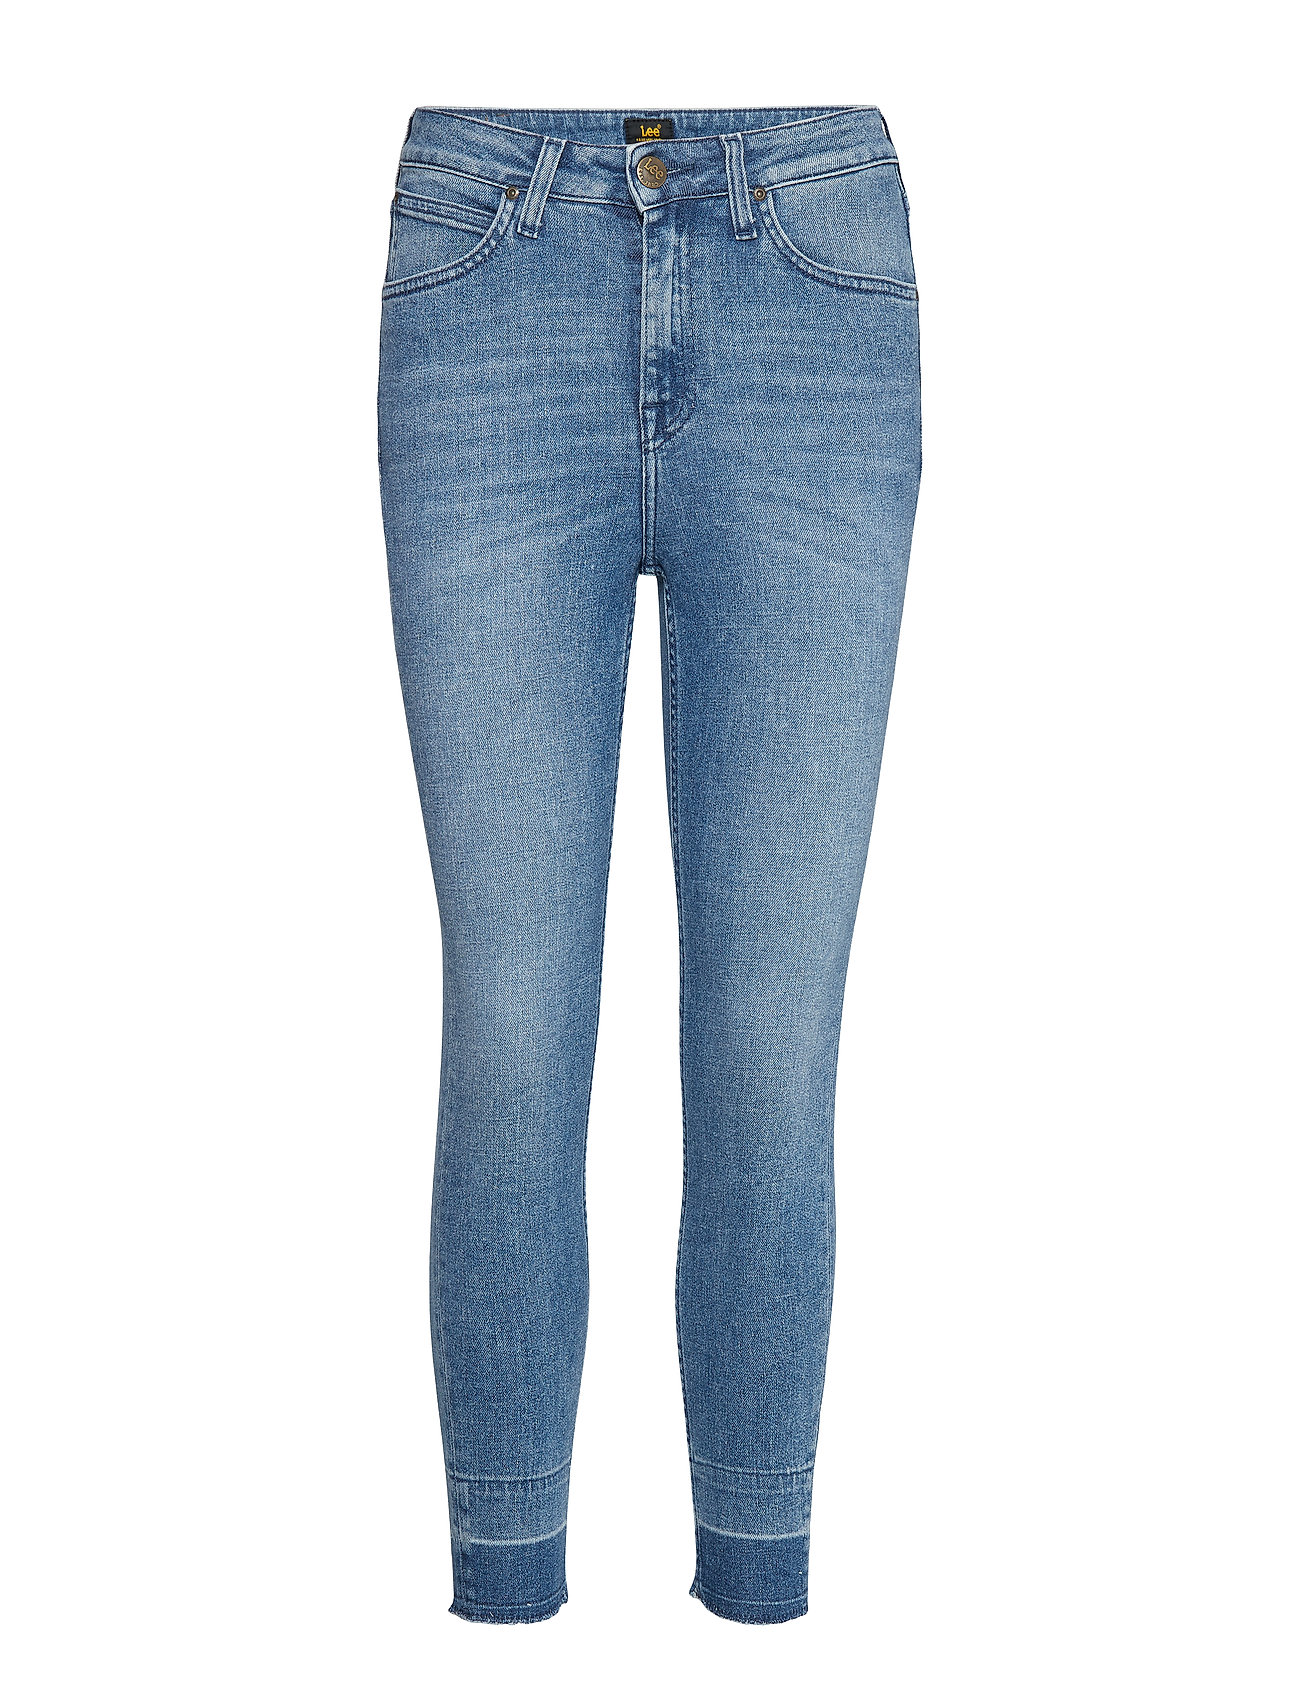 h&m vintage skinny high jeans